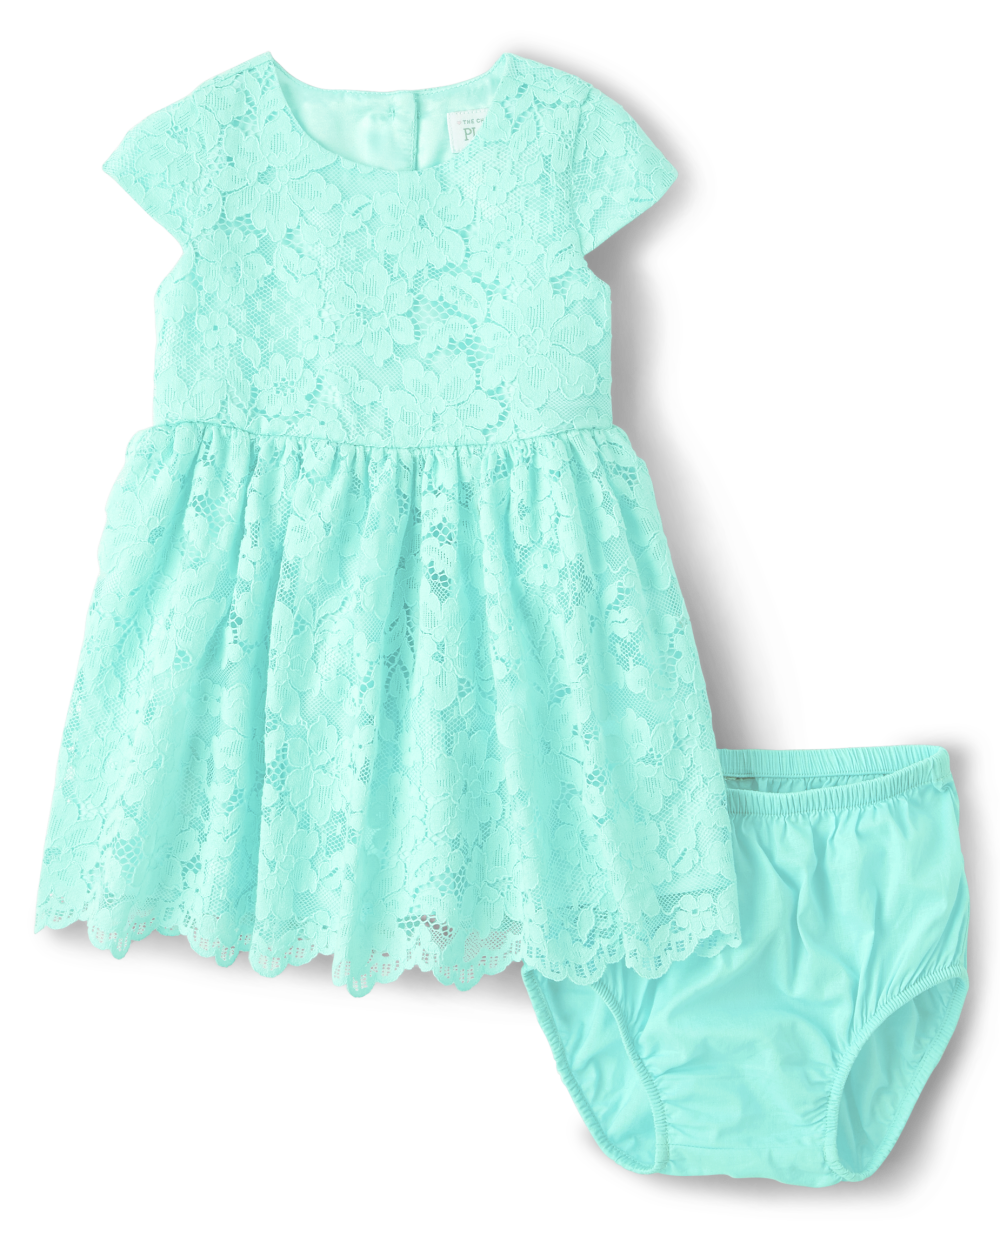 Toddler Button Closure Above the Knee Cap Short Sleeves Sleeves Elasticized Waistline Dress